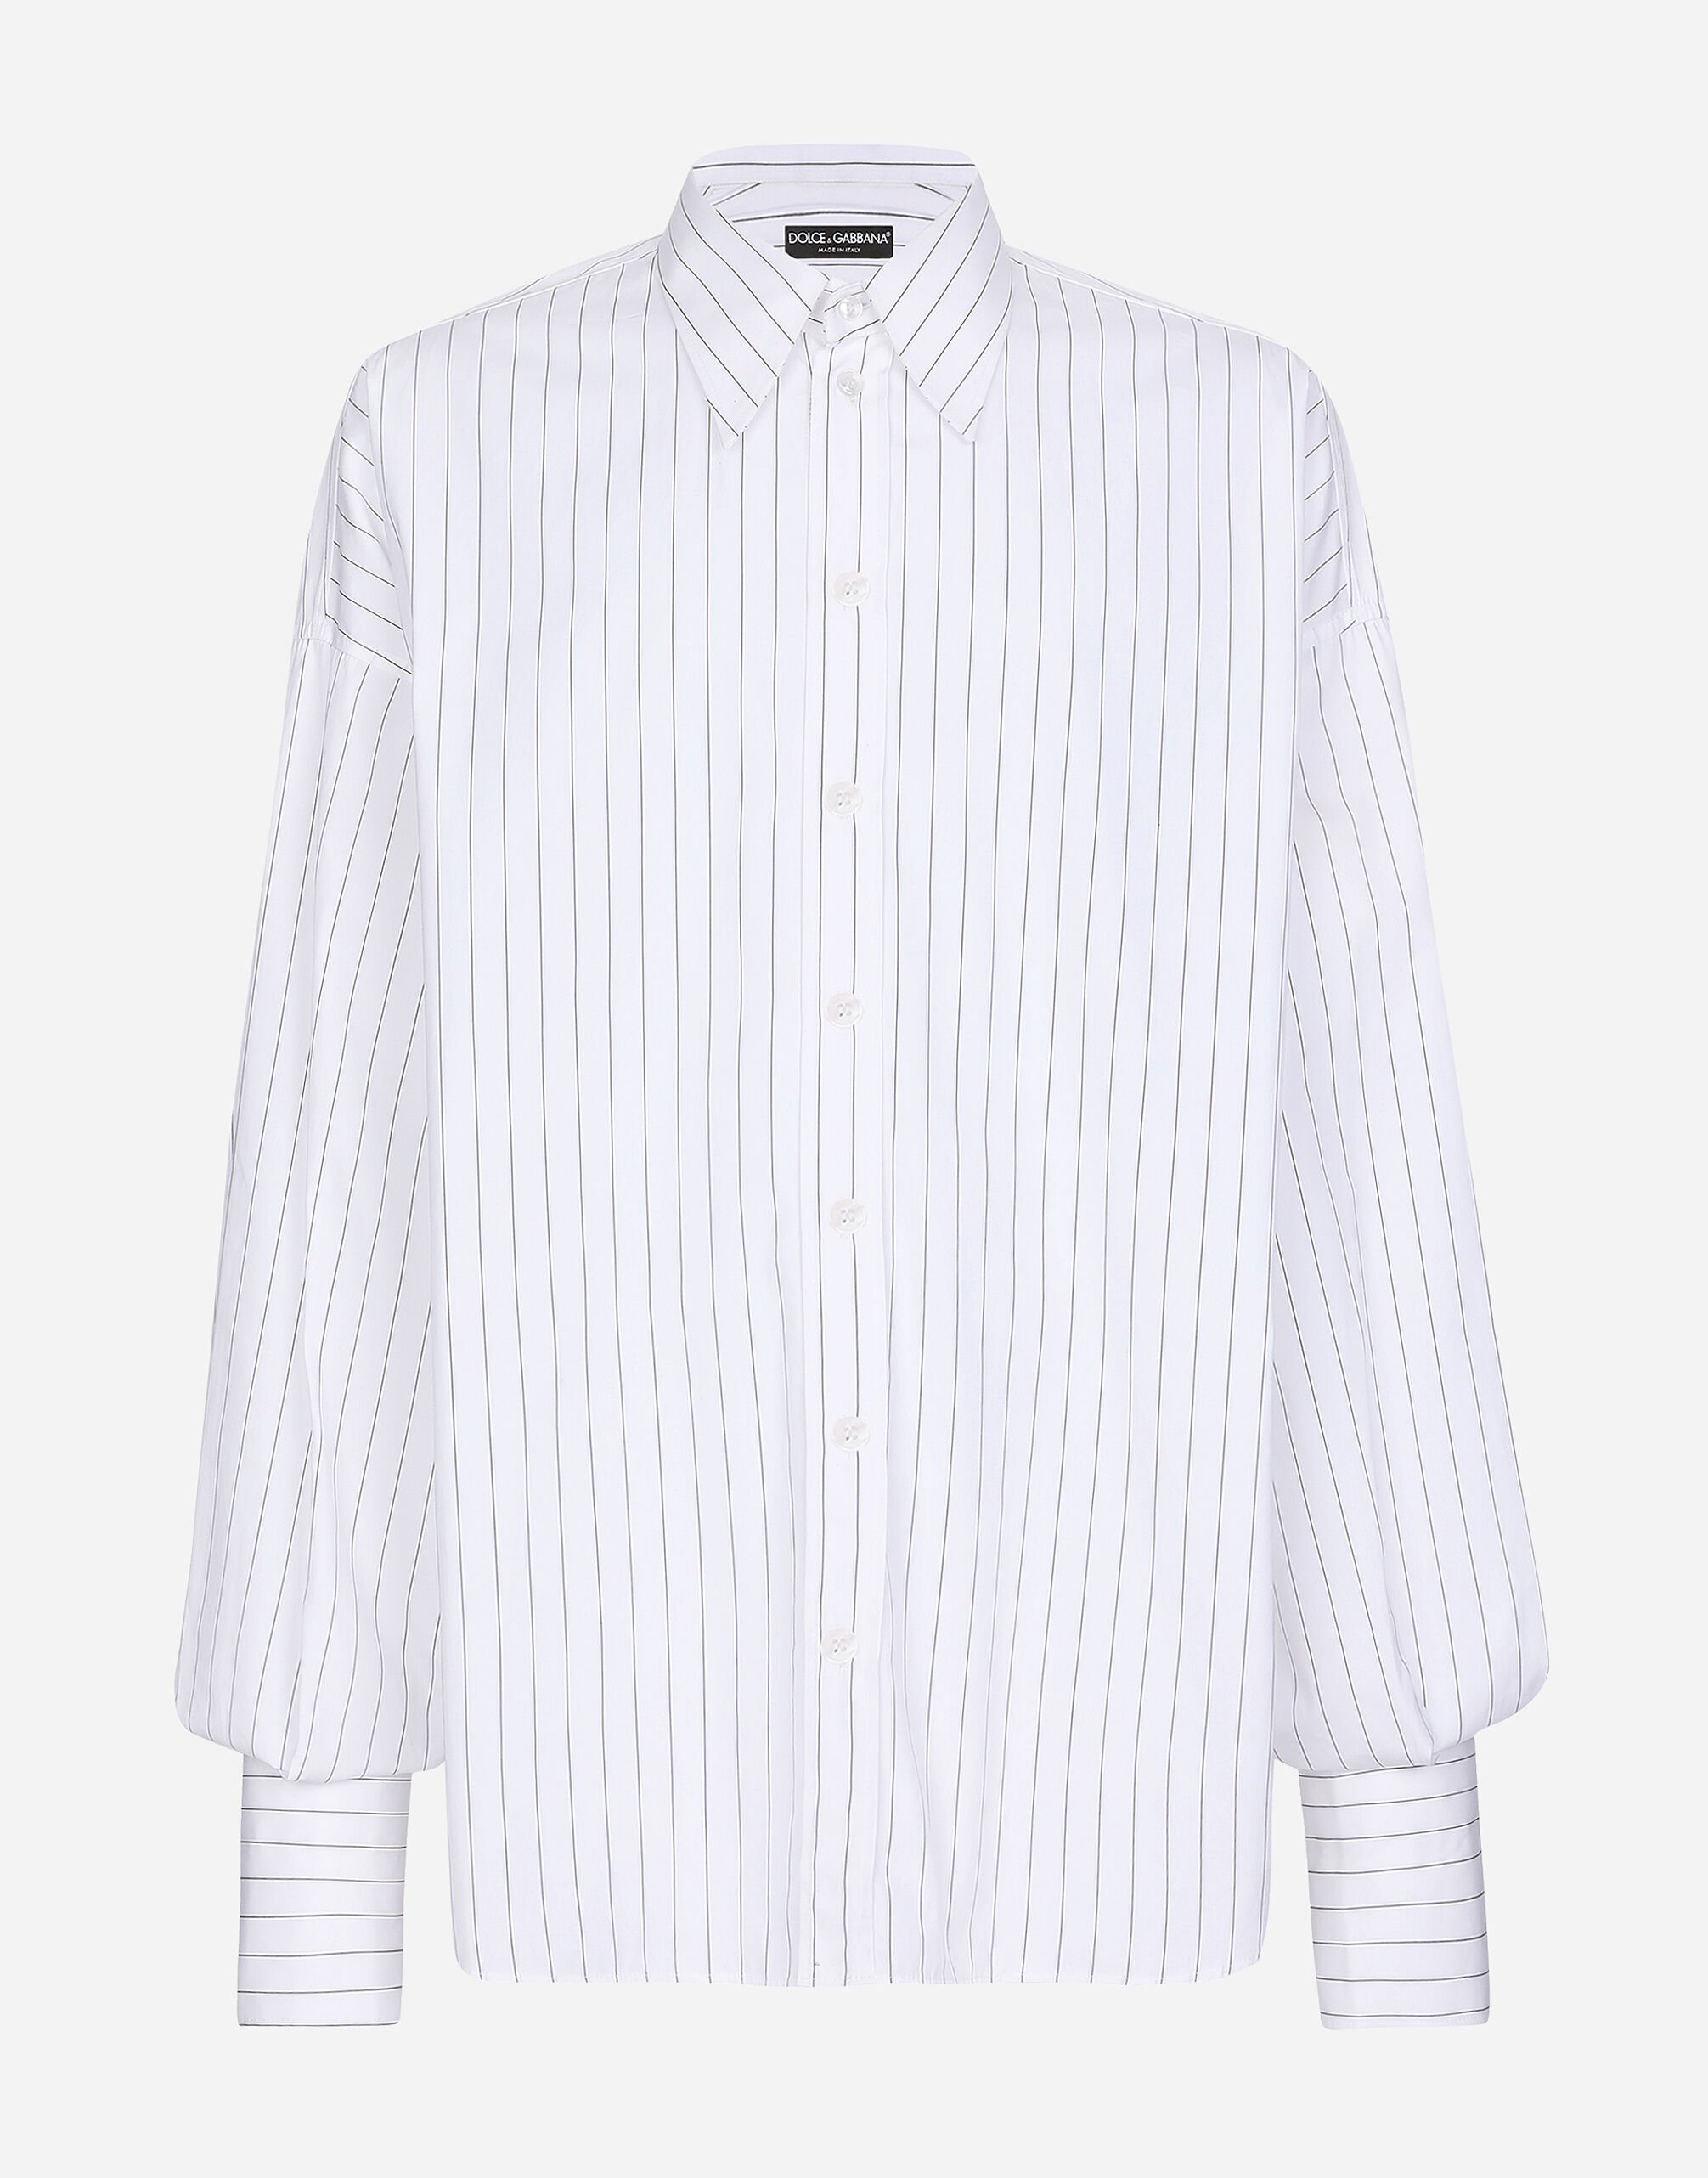 Dolce & Gabbana Super-oversize striped poplin shirt White GY6IETGG868